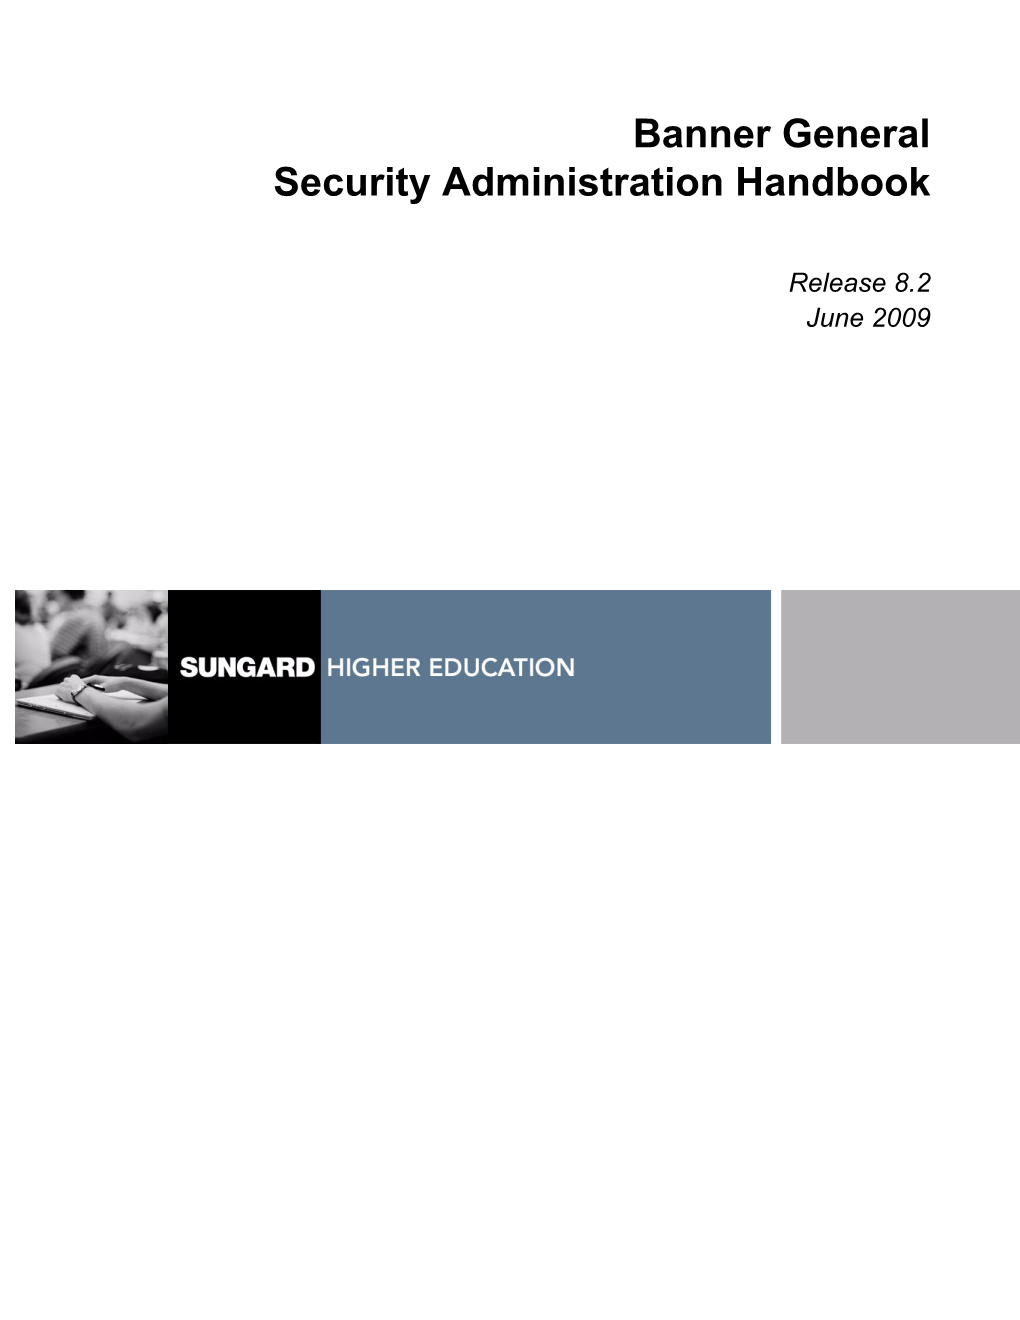 Banner General / Security Administration Handbook